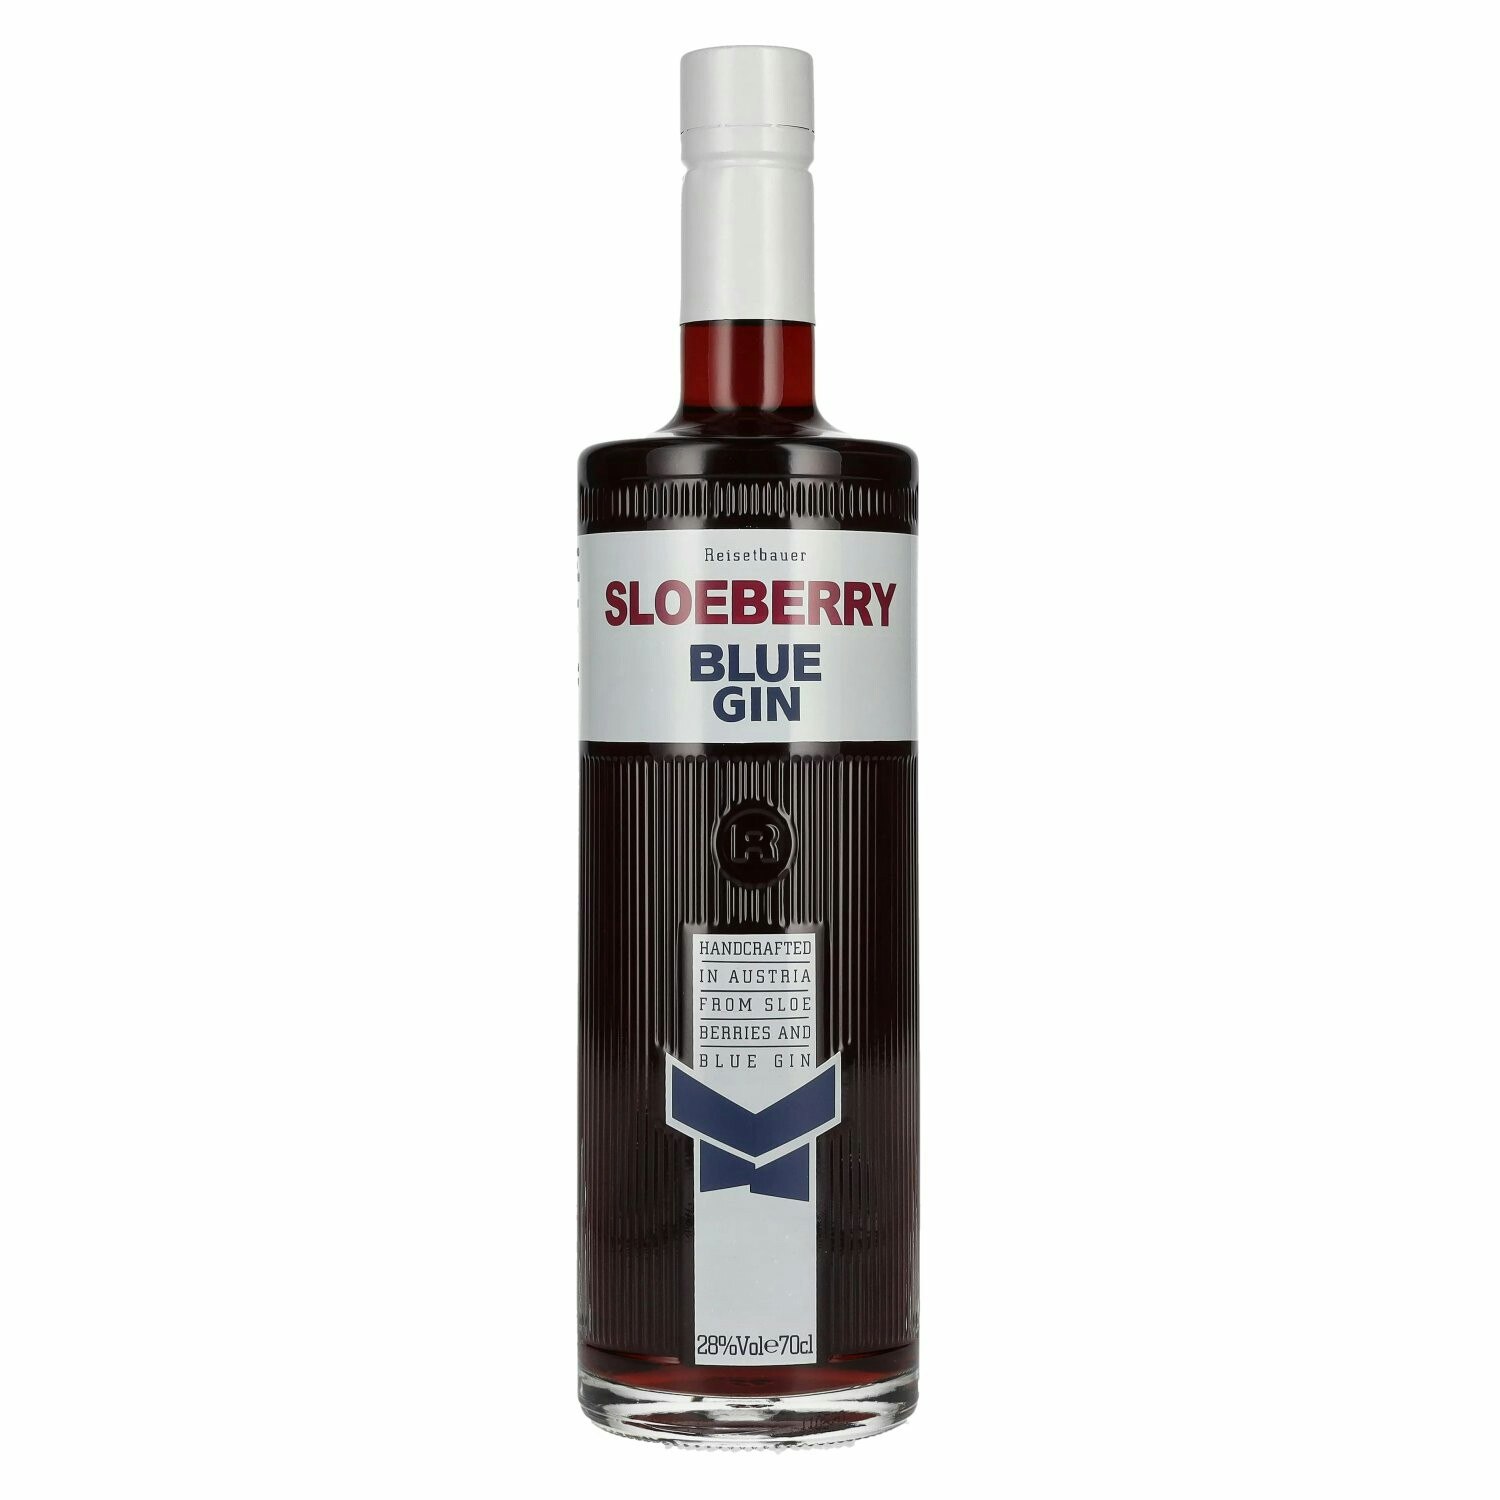 Reisetbauer Blue Gin Sloeberry Limited Edition 28% Vol. 0,7l